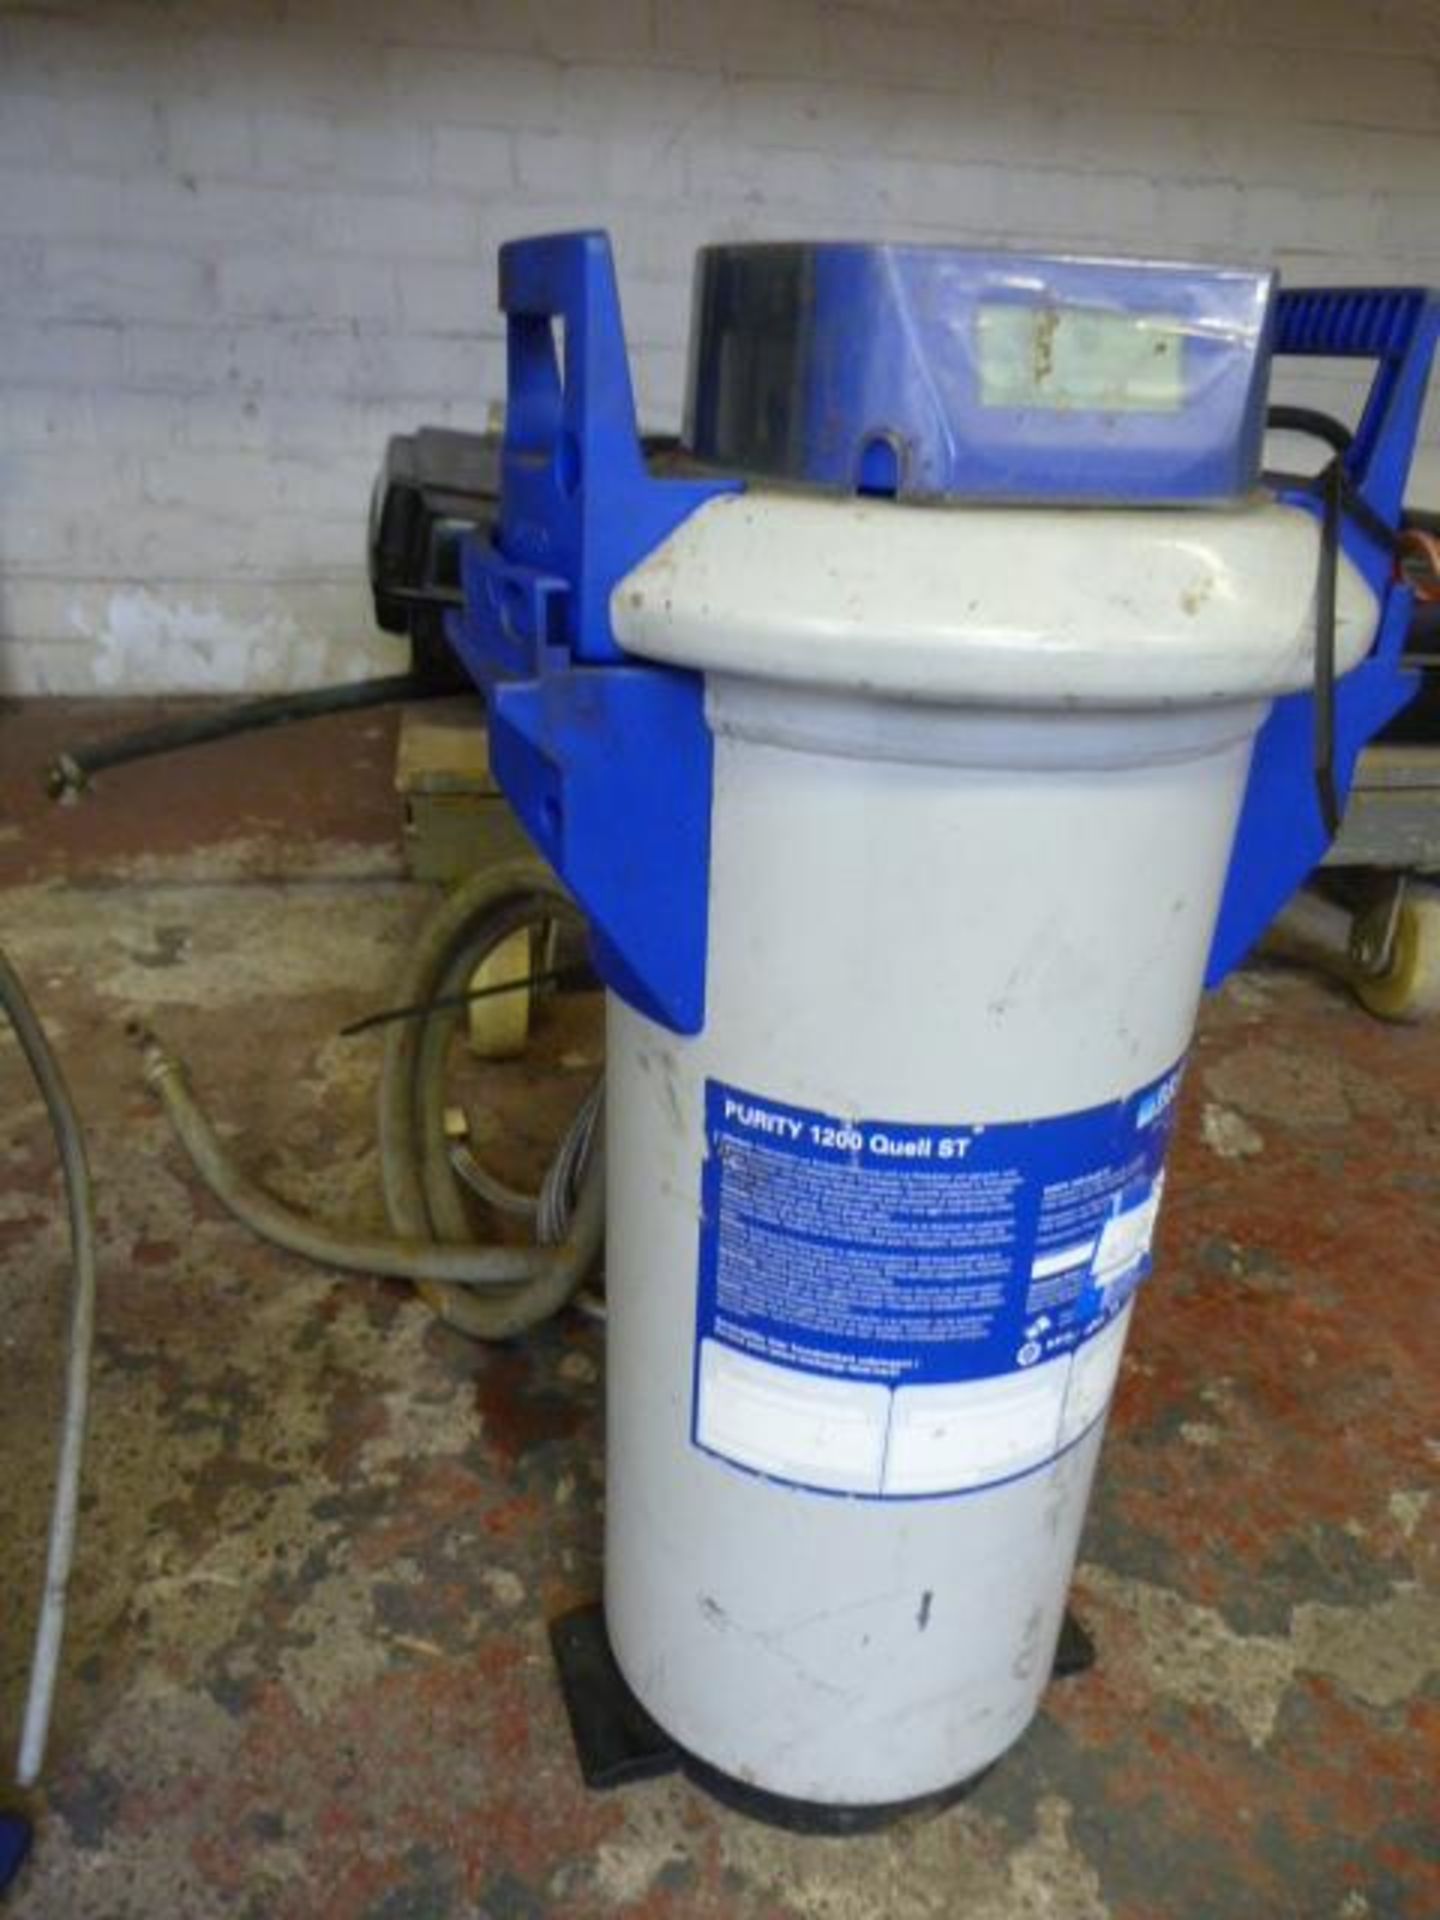 Brita Purity 1200 Quell ST Water Purifier